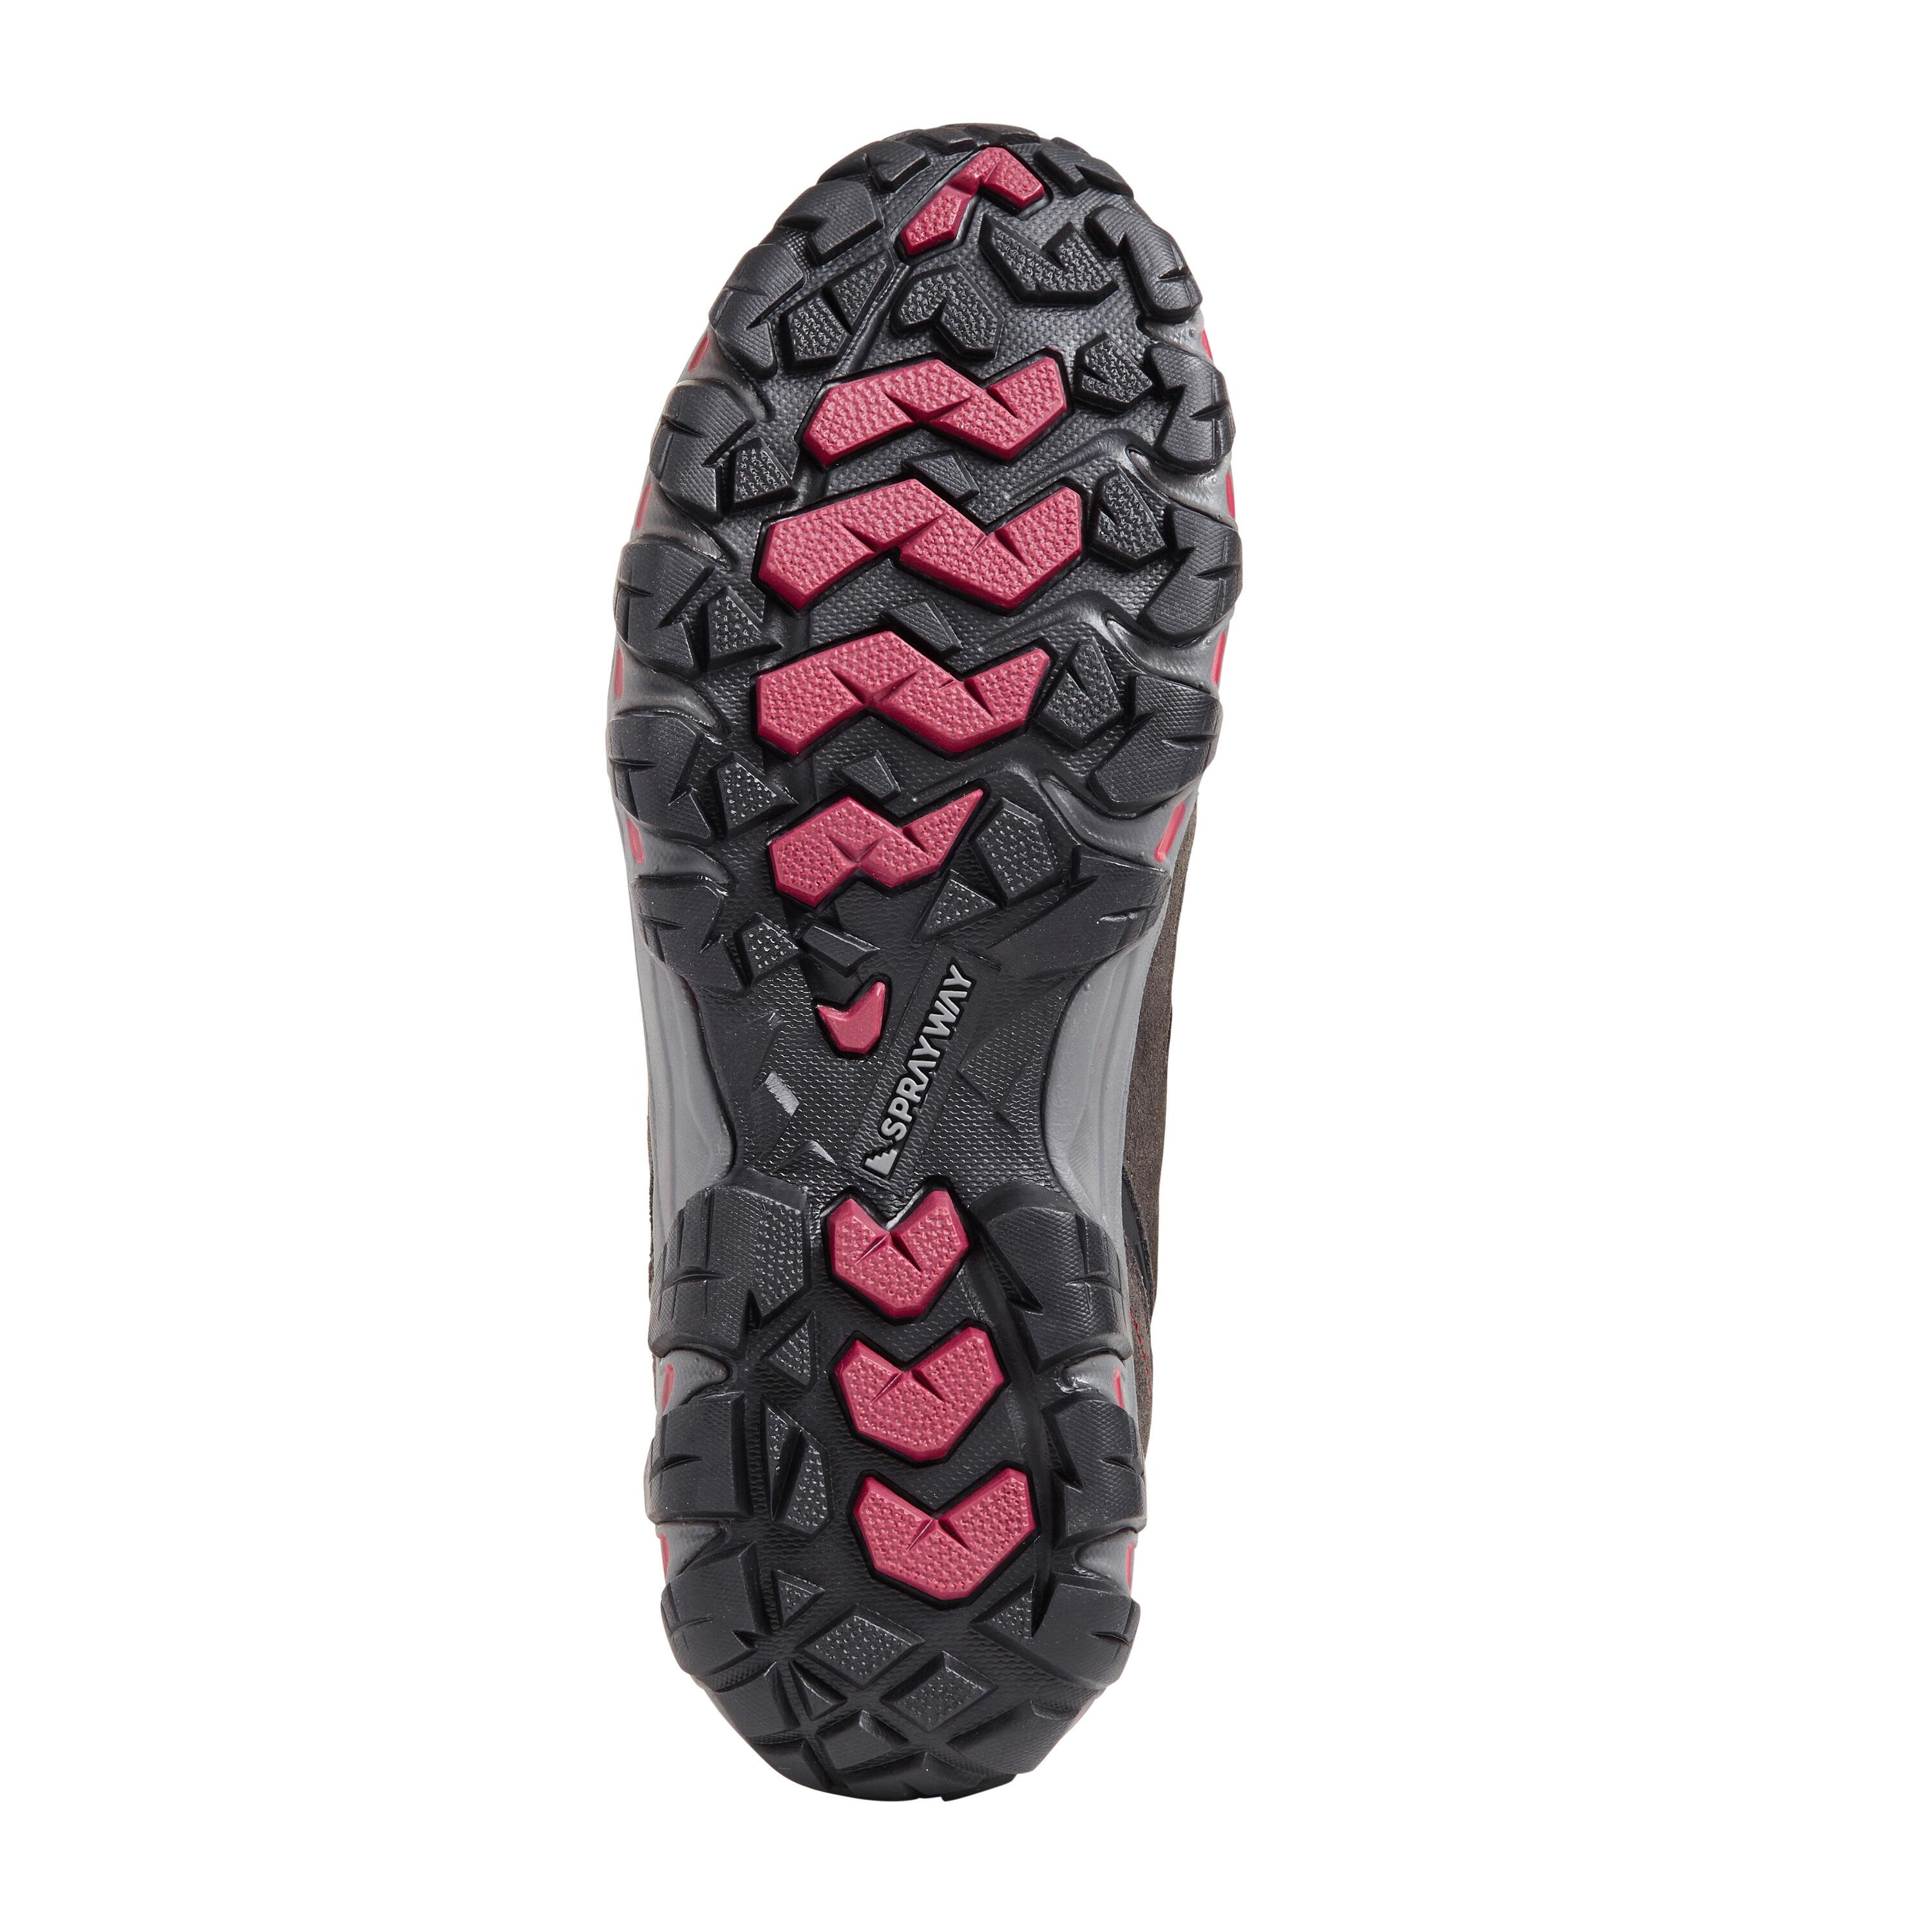 Women's waterproof walking boots - Sprayway Iona mid - Black 5/5